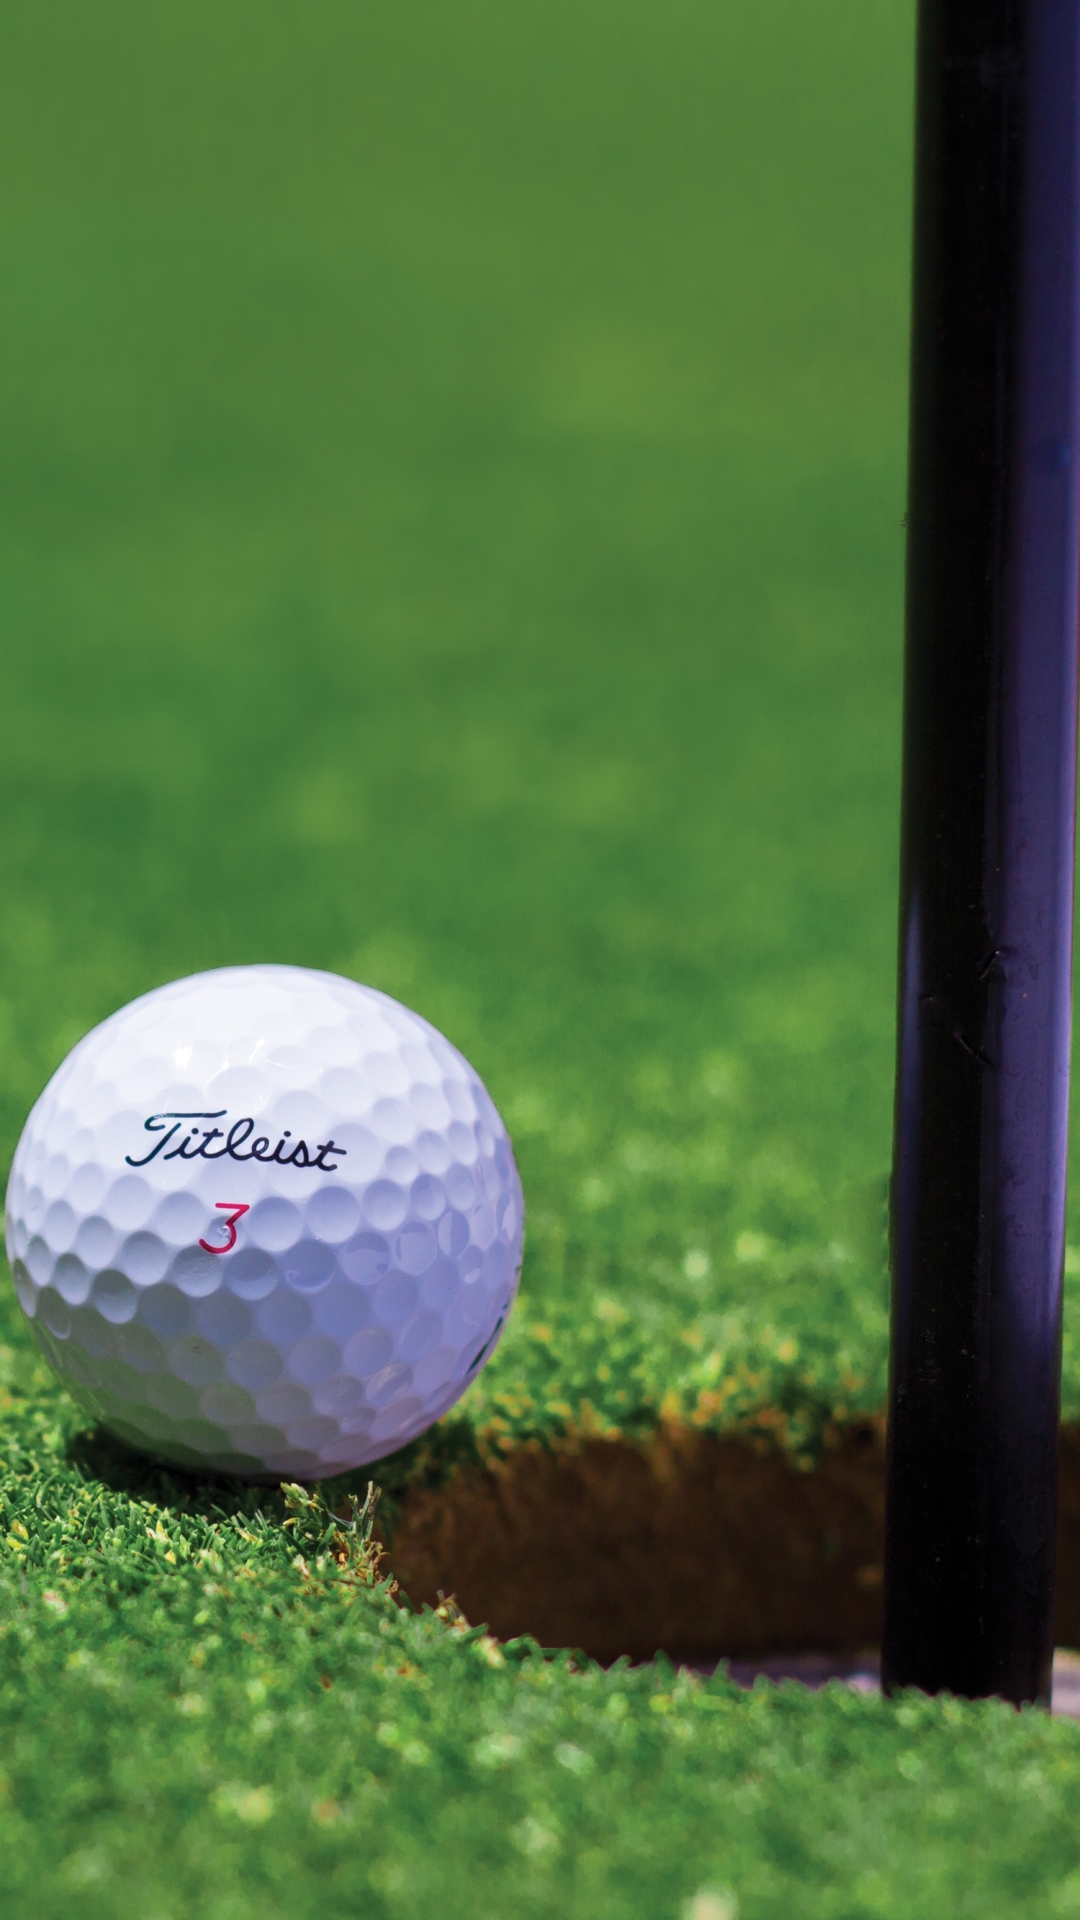 A Fitleist golf ball beside a hole on a golf course